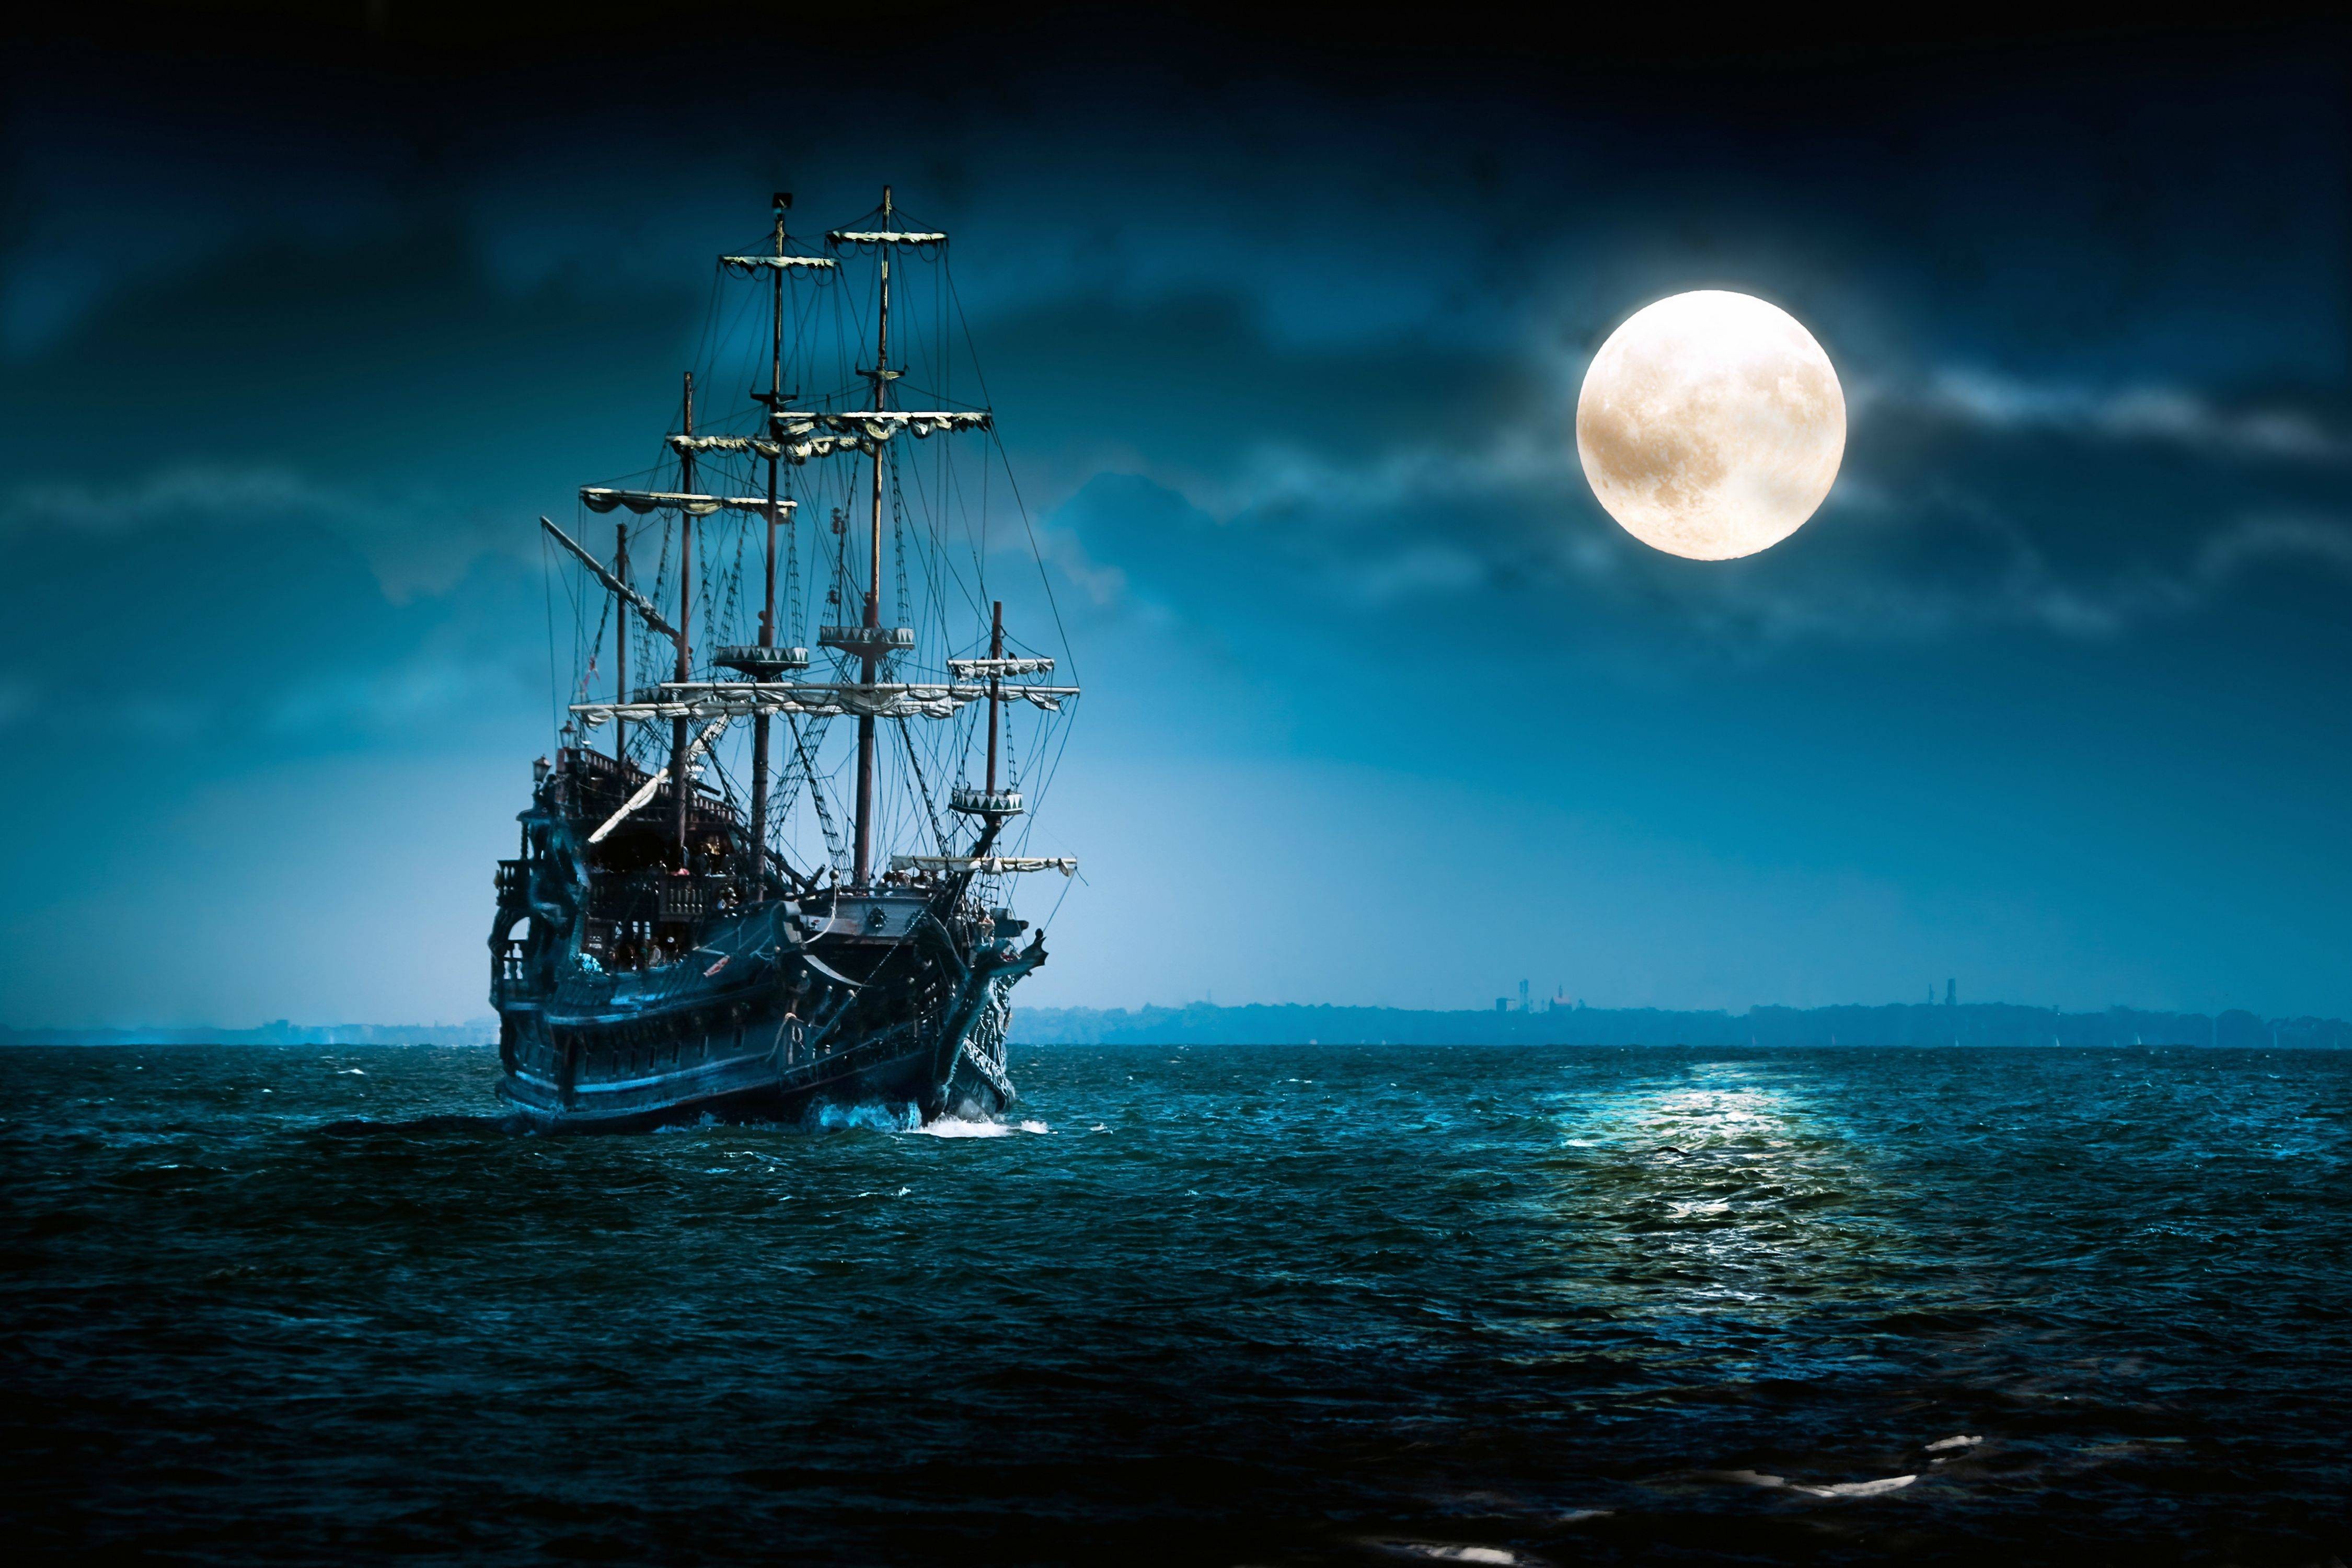 General 4500x3000 pirates ship Moon sea blue night vehicle fantasy art rigging (ship) sailing ship digital art